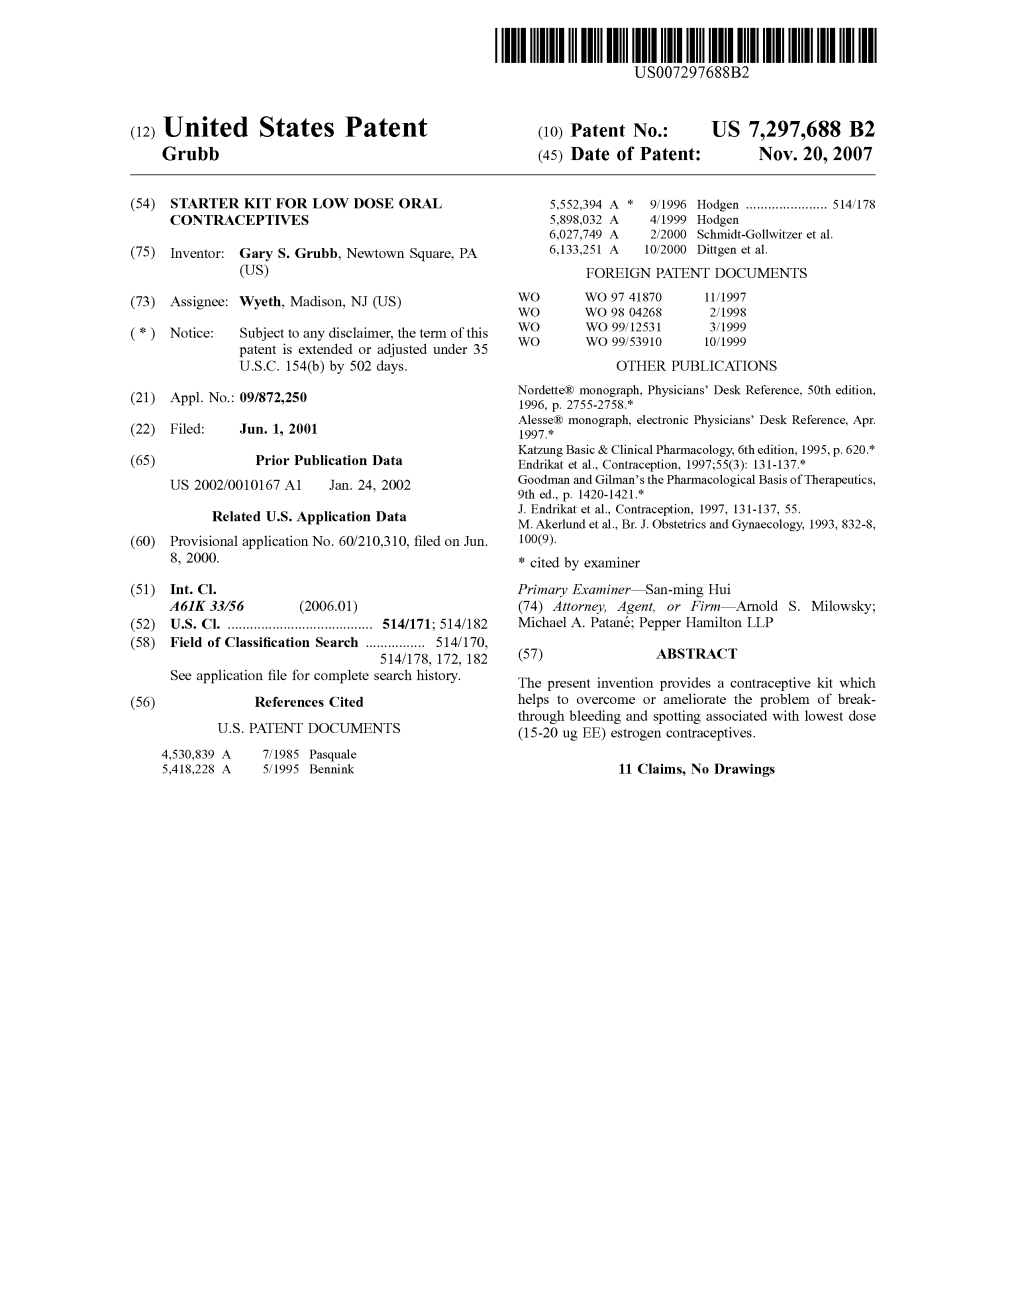 United States Patent (10) Patent N0.: US 7,297,688 B2 Grubb (45) Date of Patent: Nov